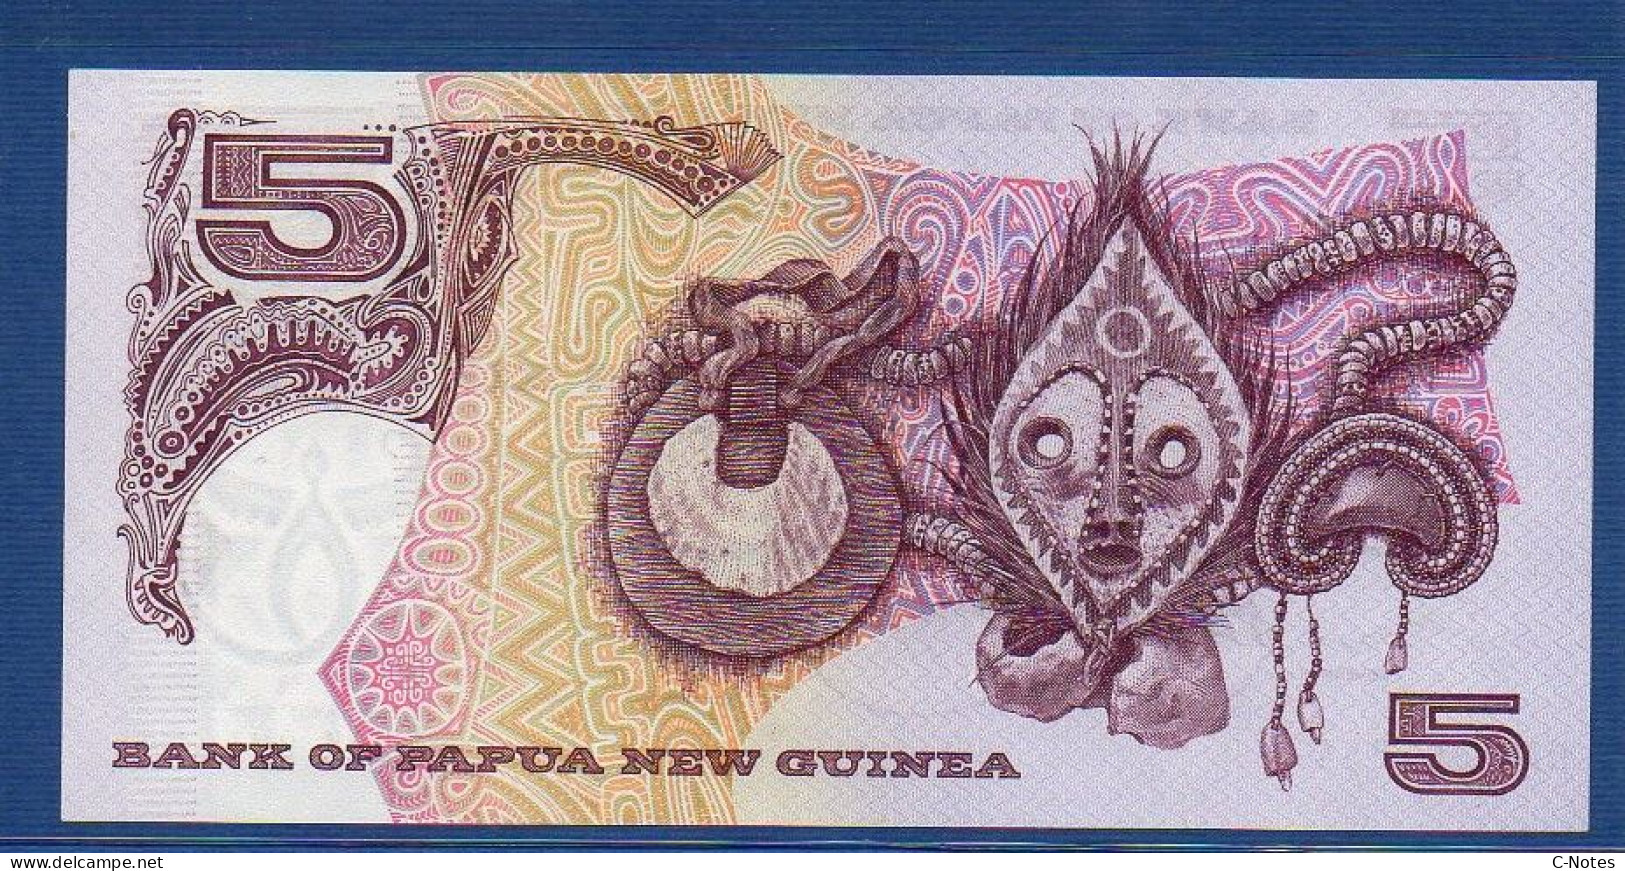 PAPUA NEW GUINEA - P. 6a – 5 KINA ND (1981-1987) UNC, S/n HAK 004854 - Papua New Guinea